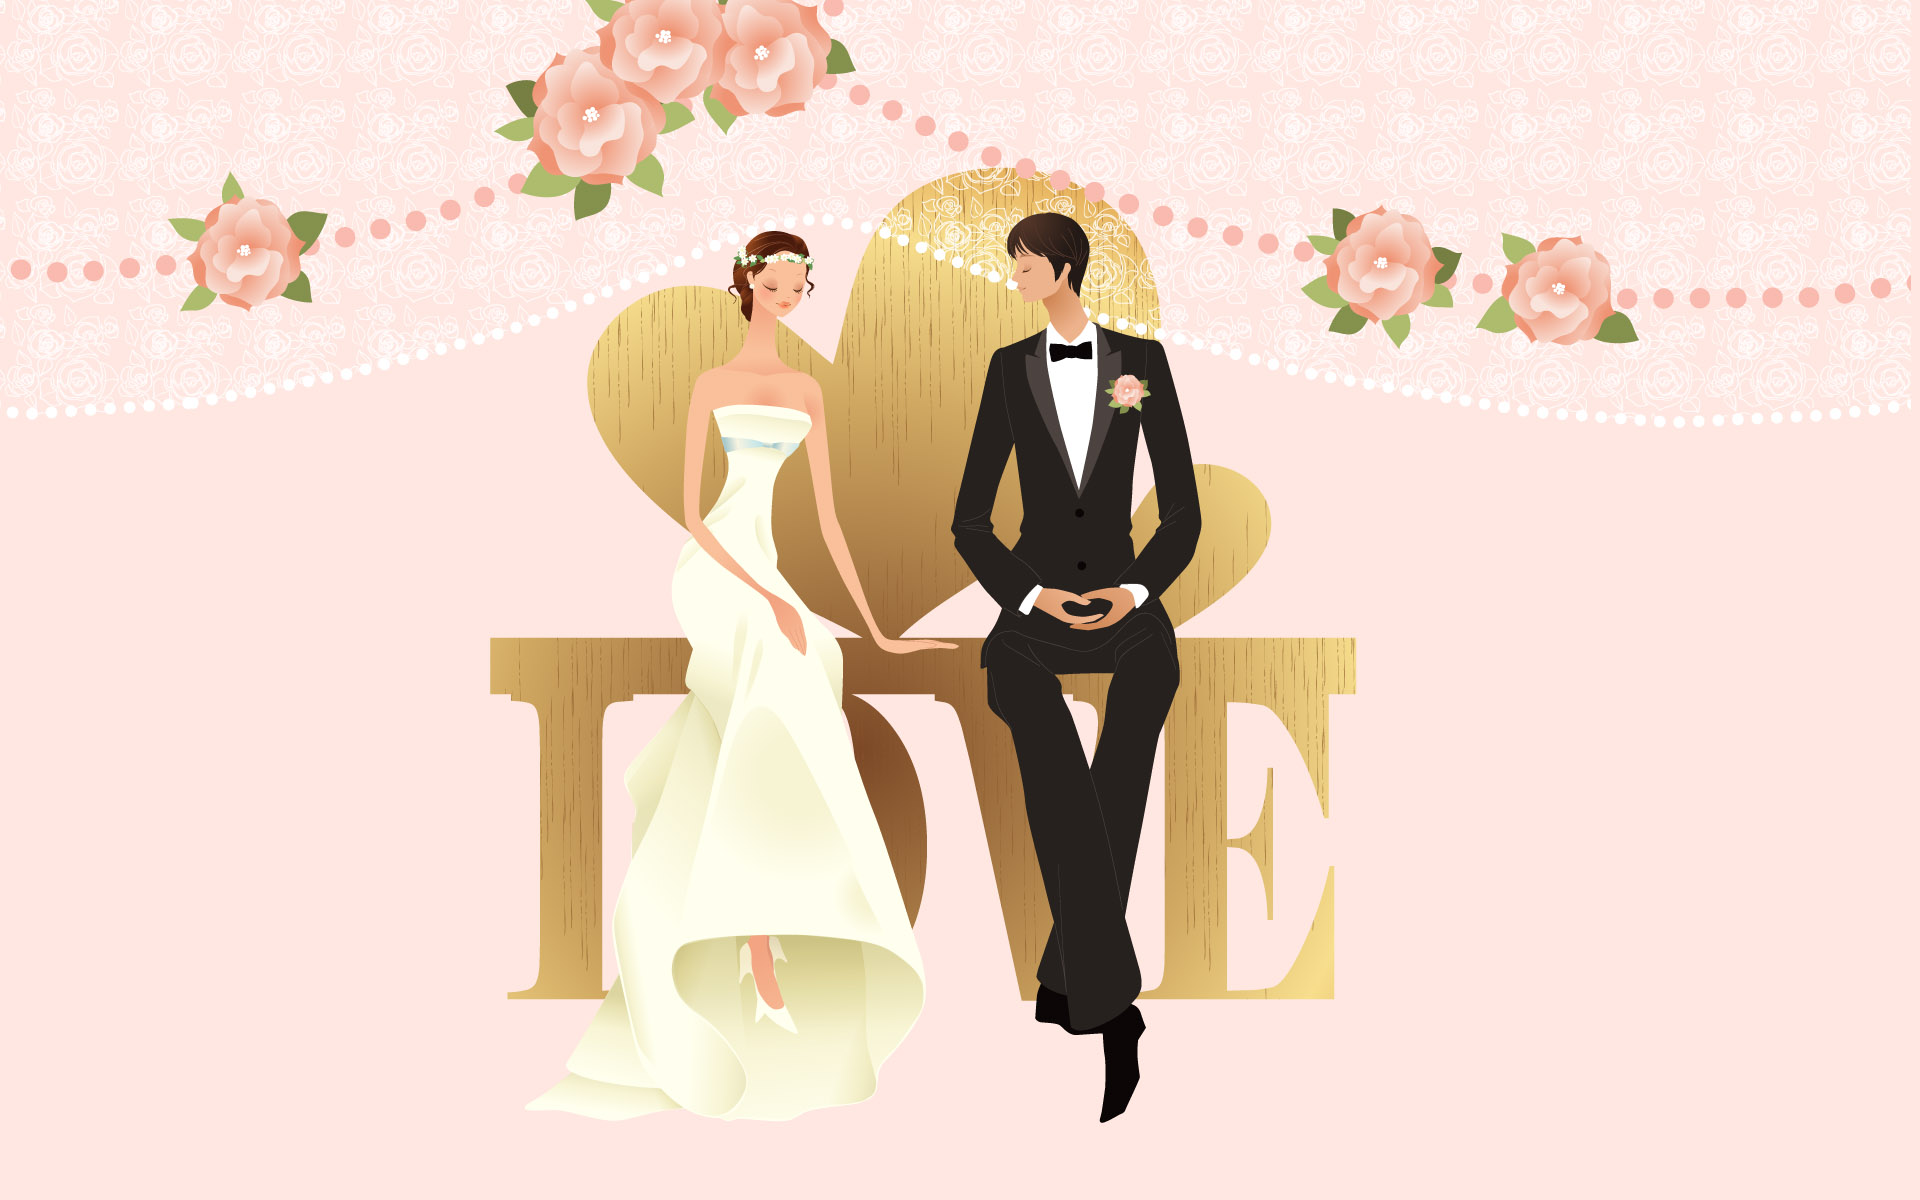 Love Wedding - Wallpaper, High Definition, High Quality, Widescreen